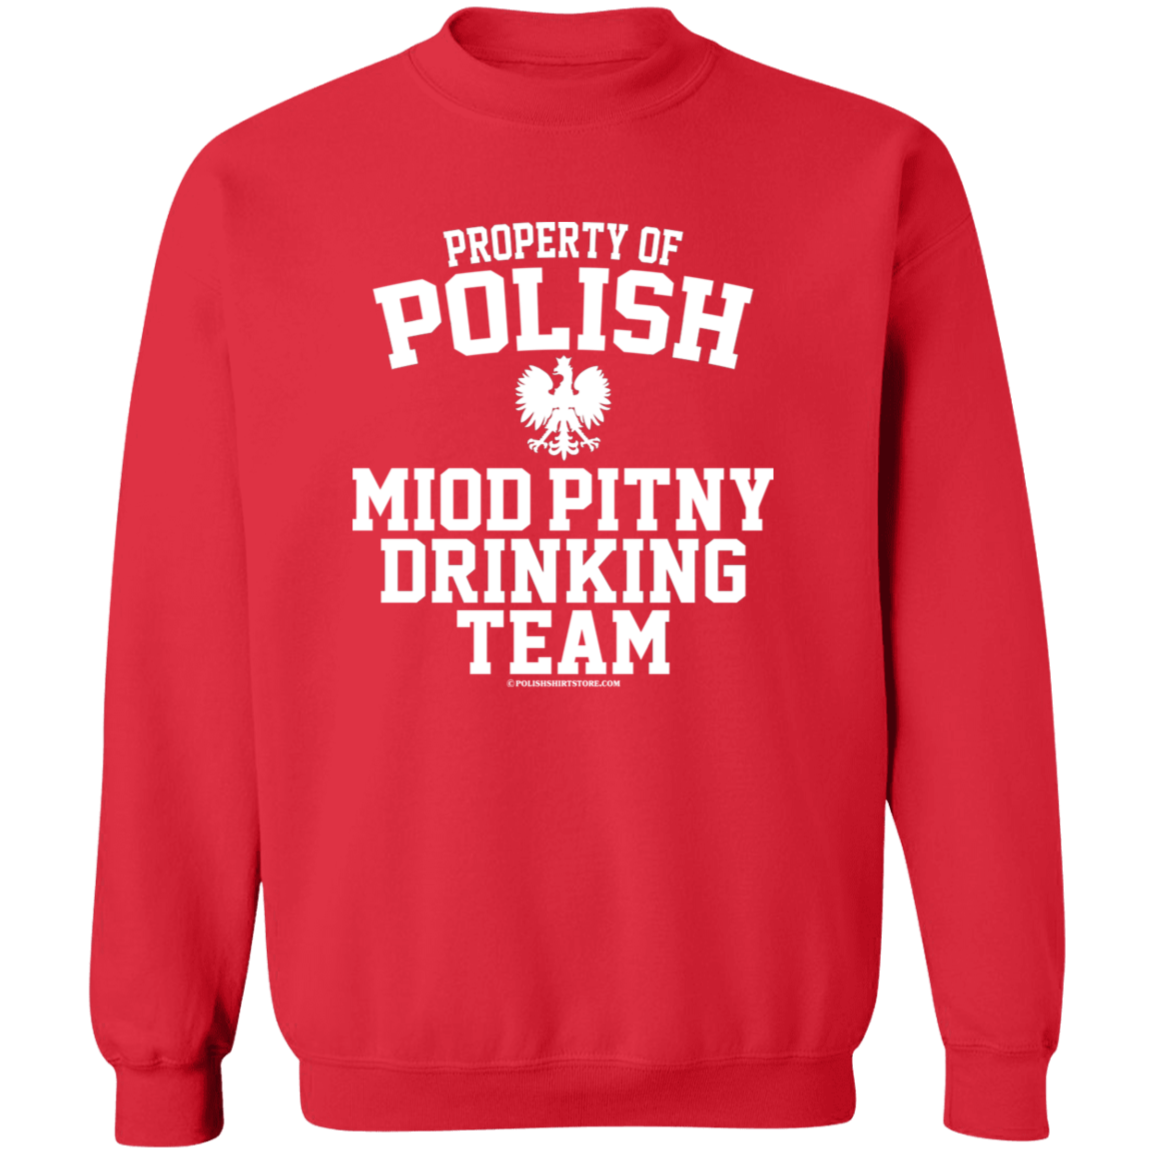 Property of Polish Miod Pitny Drinking Team Apparel CustomCat G180 Crewneck Pullover Sweatshirt Red S